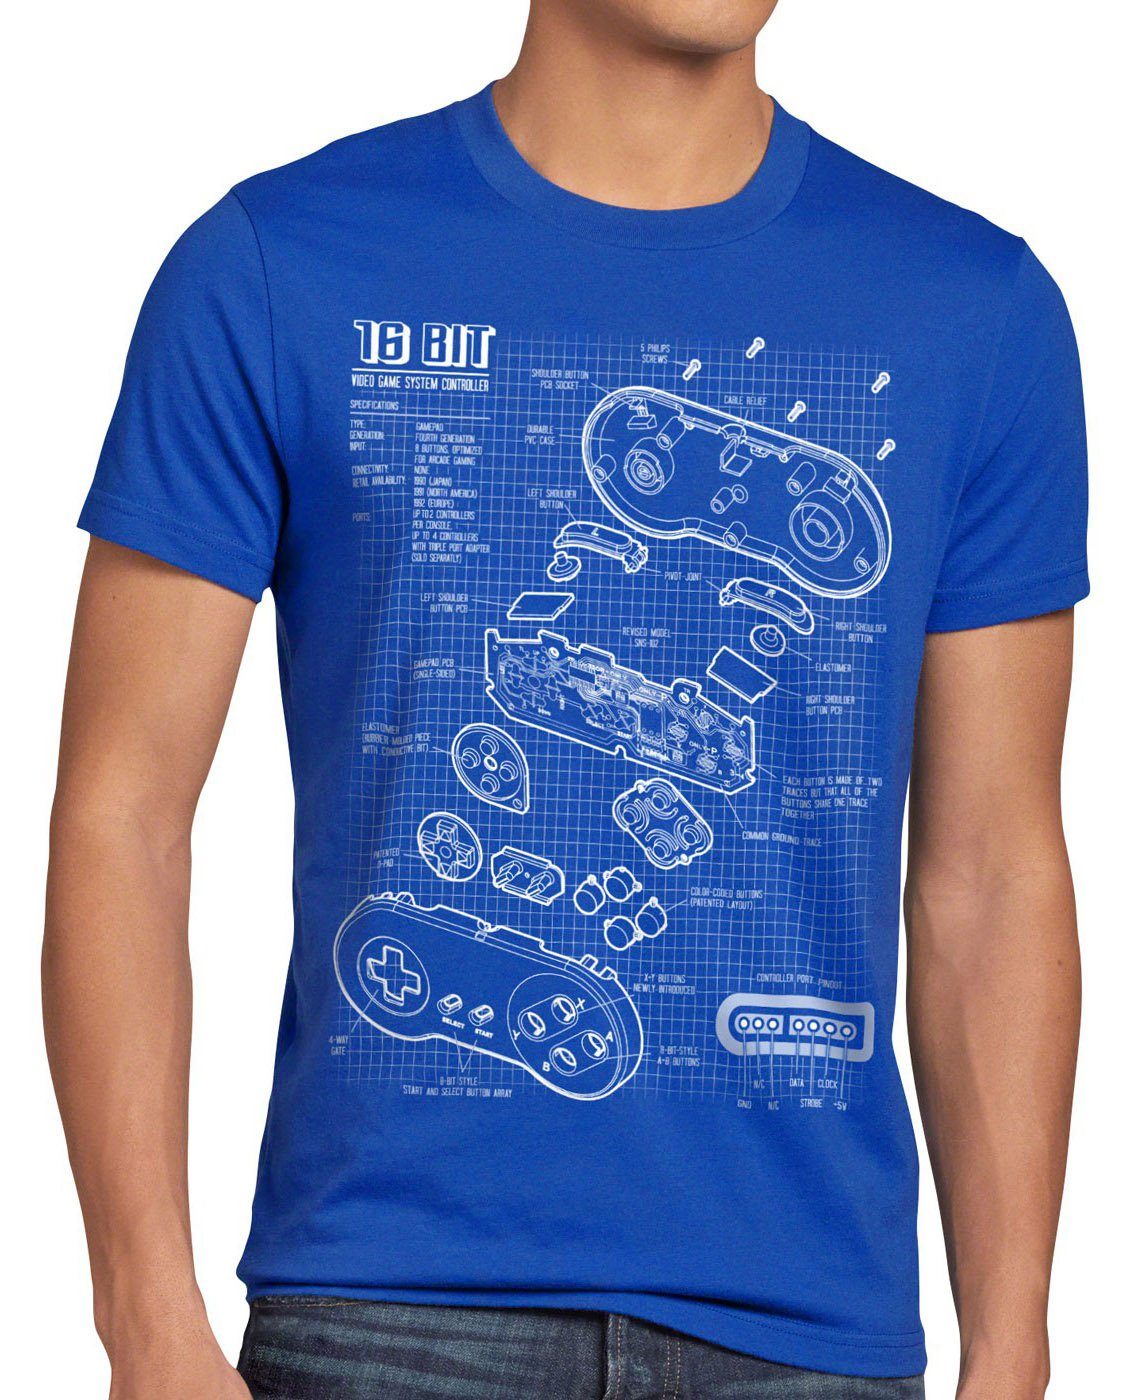 style3 Print-Shirt Herren T-Shirt 16-Bit Gamer classic snes nintendo nes switch super famicom mario blau